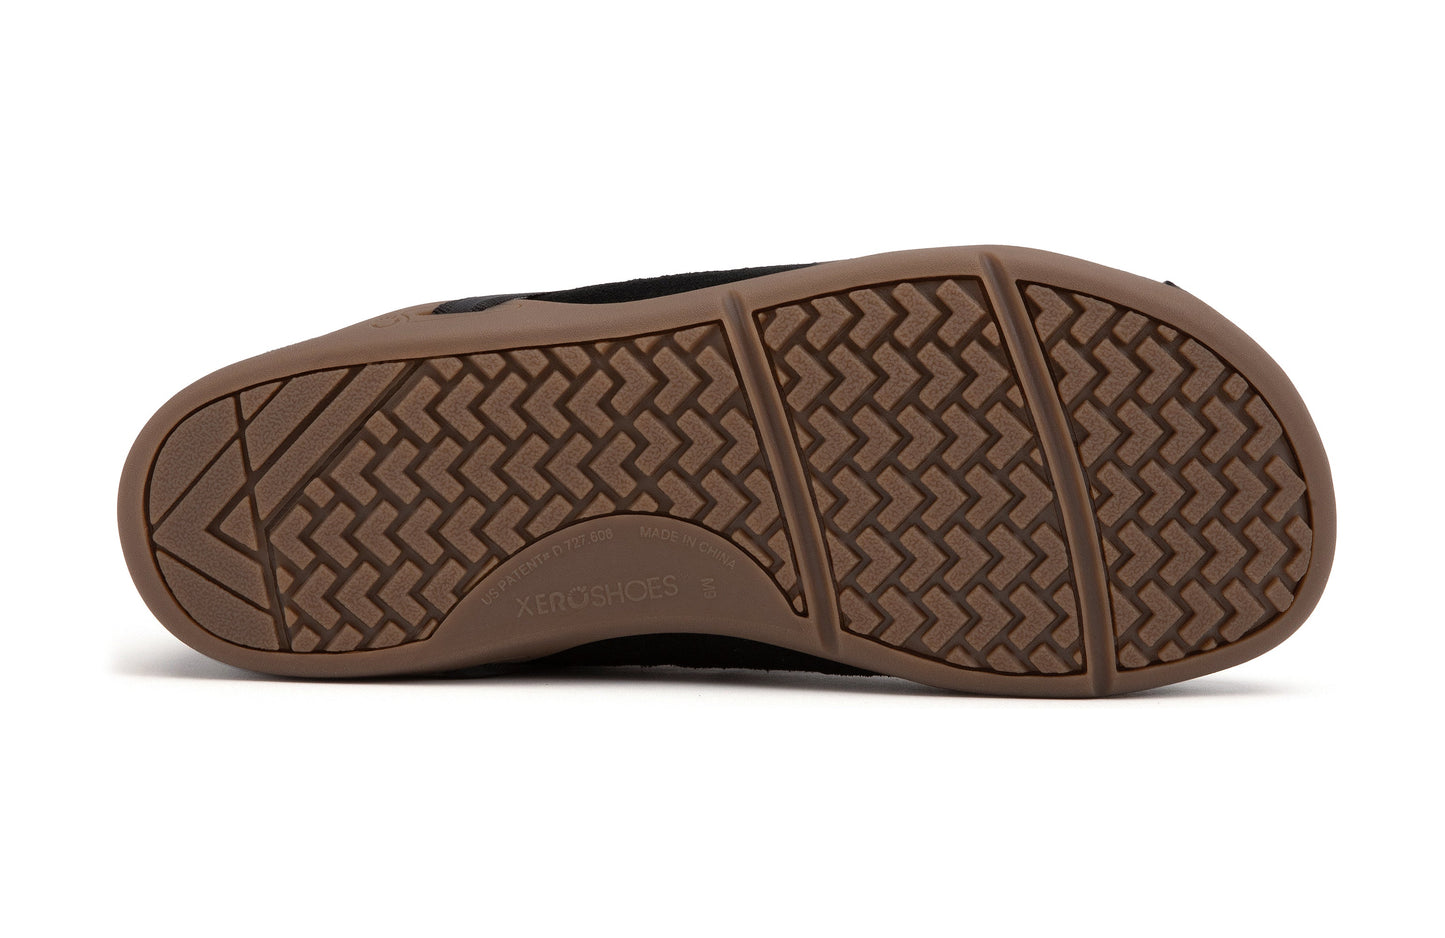 Xero Shoes Prio Suede barfods ruskind sneakers til mænd i farven black gum, saal